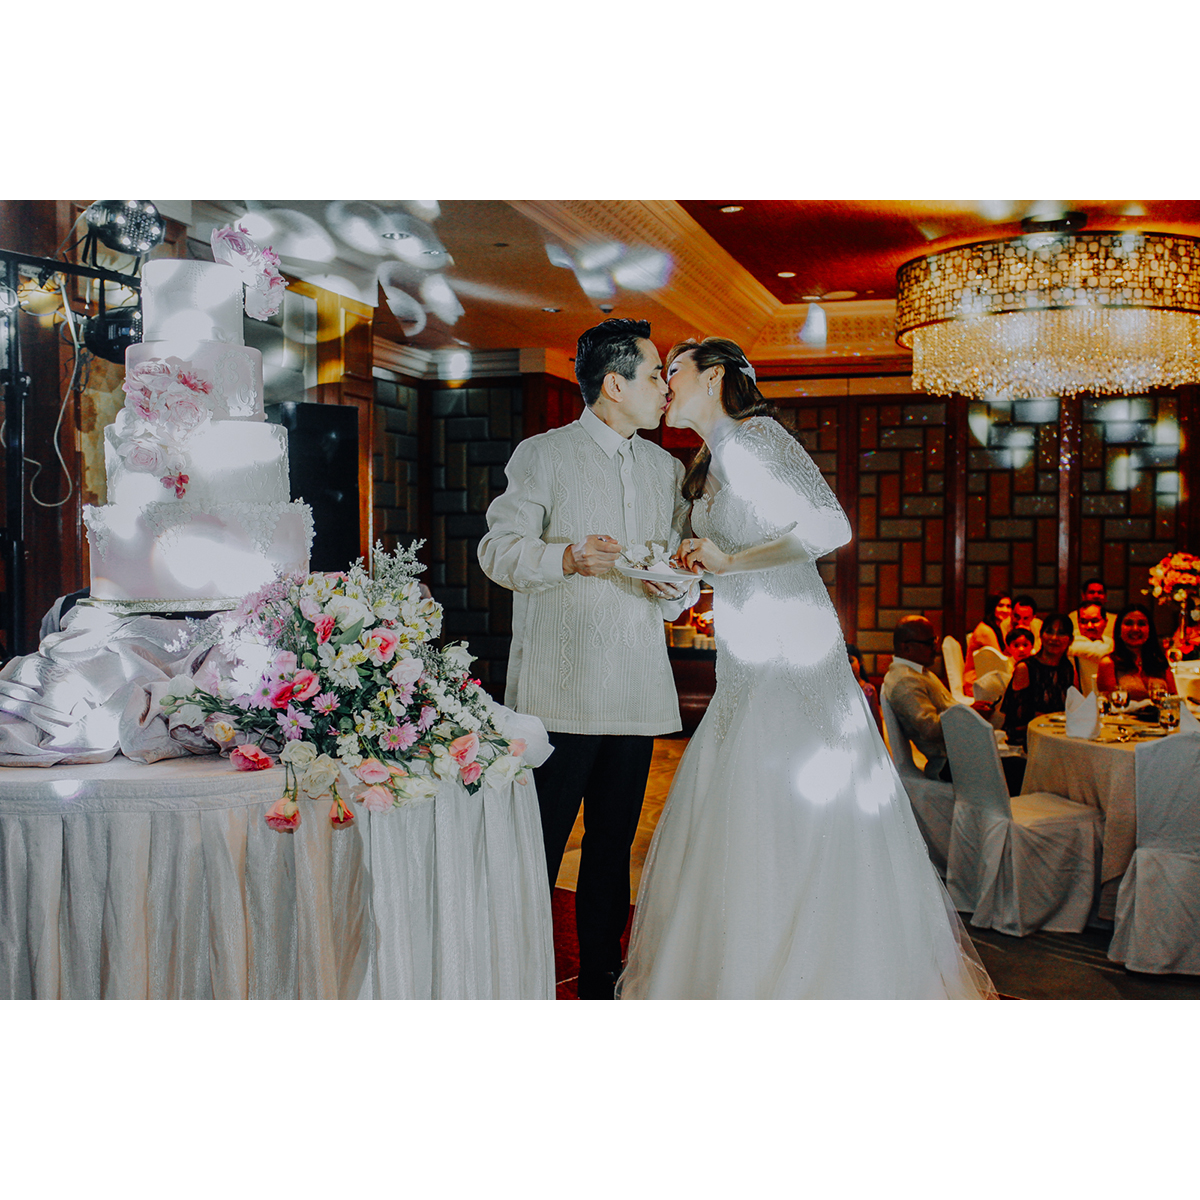 shang mactan wedding0078 - Coleen & Seigfred's Shangrila Mactan Cebu Destination Wedding